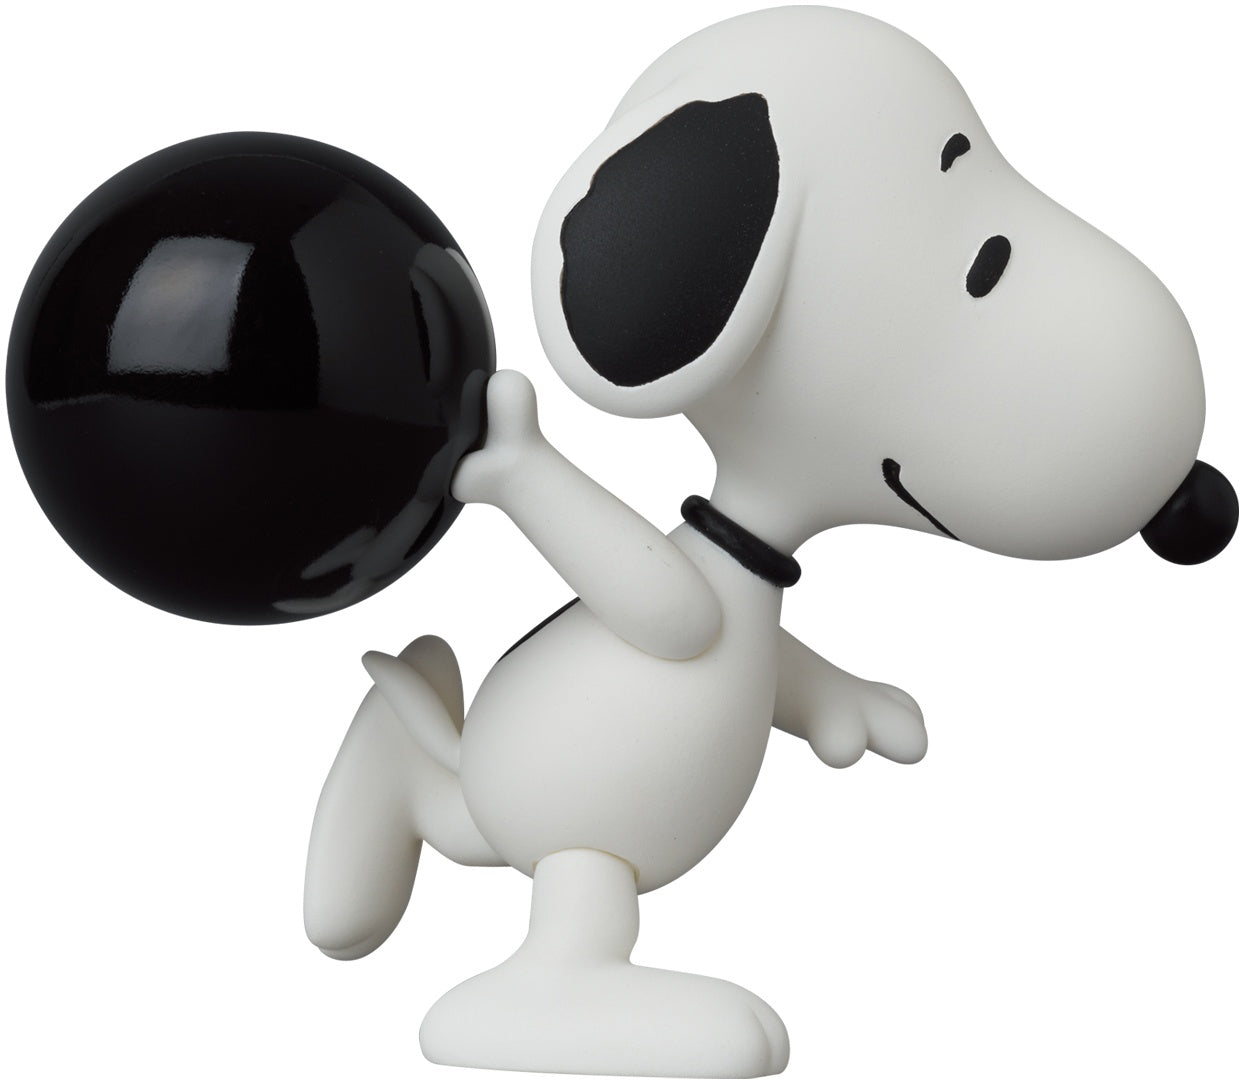 Medicom - Ultra Detail Figure No. 721 - Bowler Snoopy - Marvelous Toys